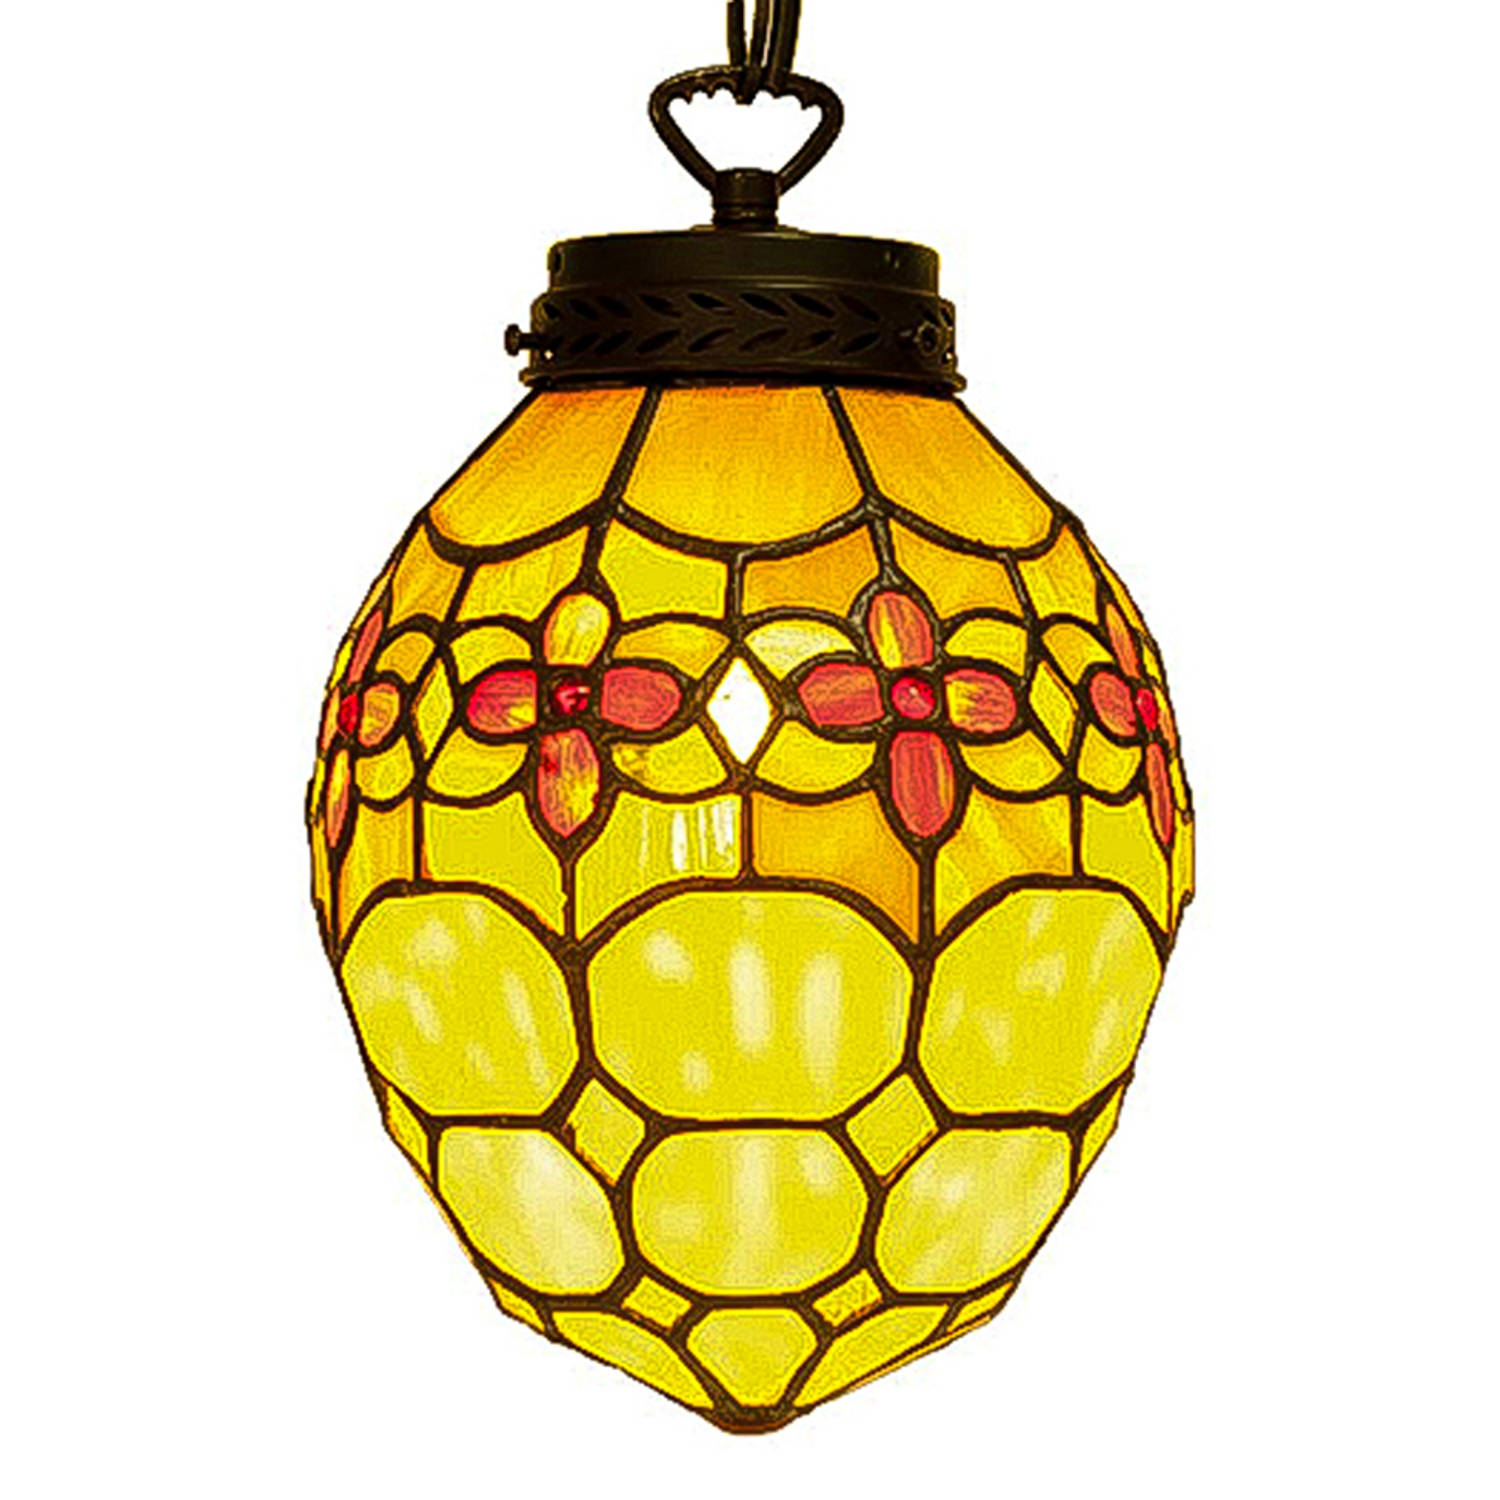 HAES DECO - Tiffany Hanglamp Ei Ø 24x155 cm Geel Ijzer Glas Ovaal Hanglamp Eettafel Hanglampen Eetkamer Glas in Lood